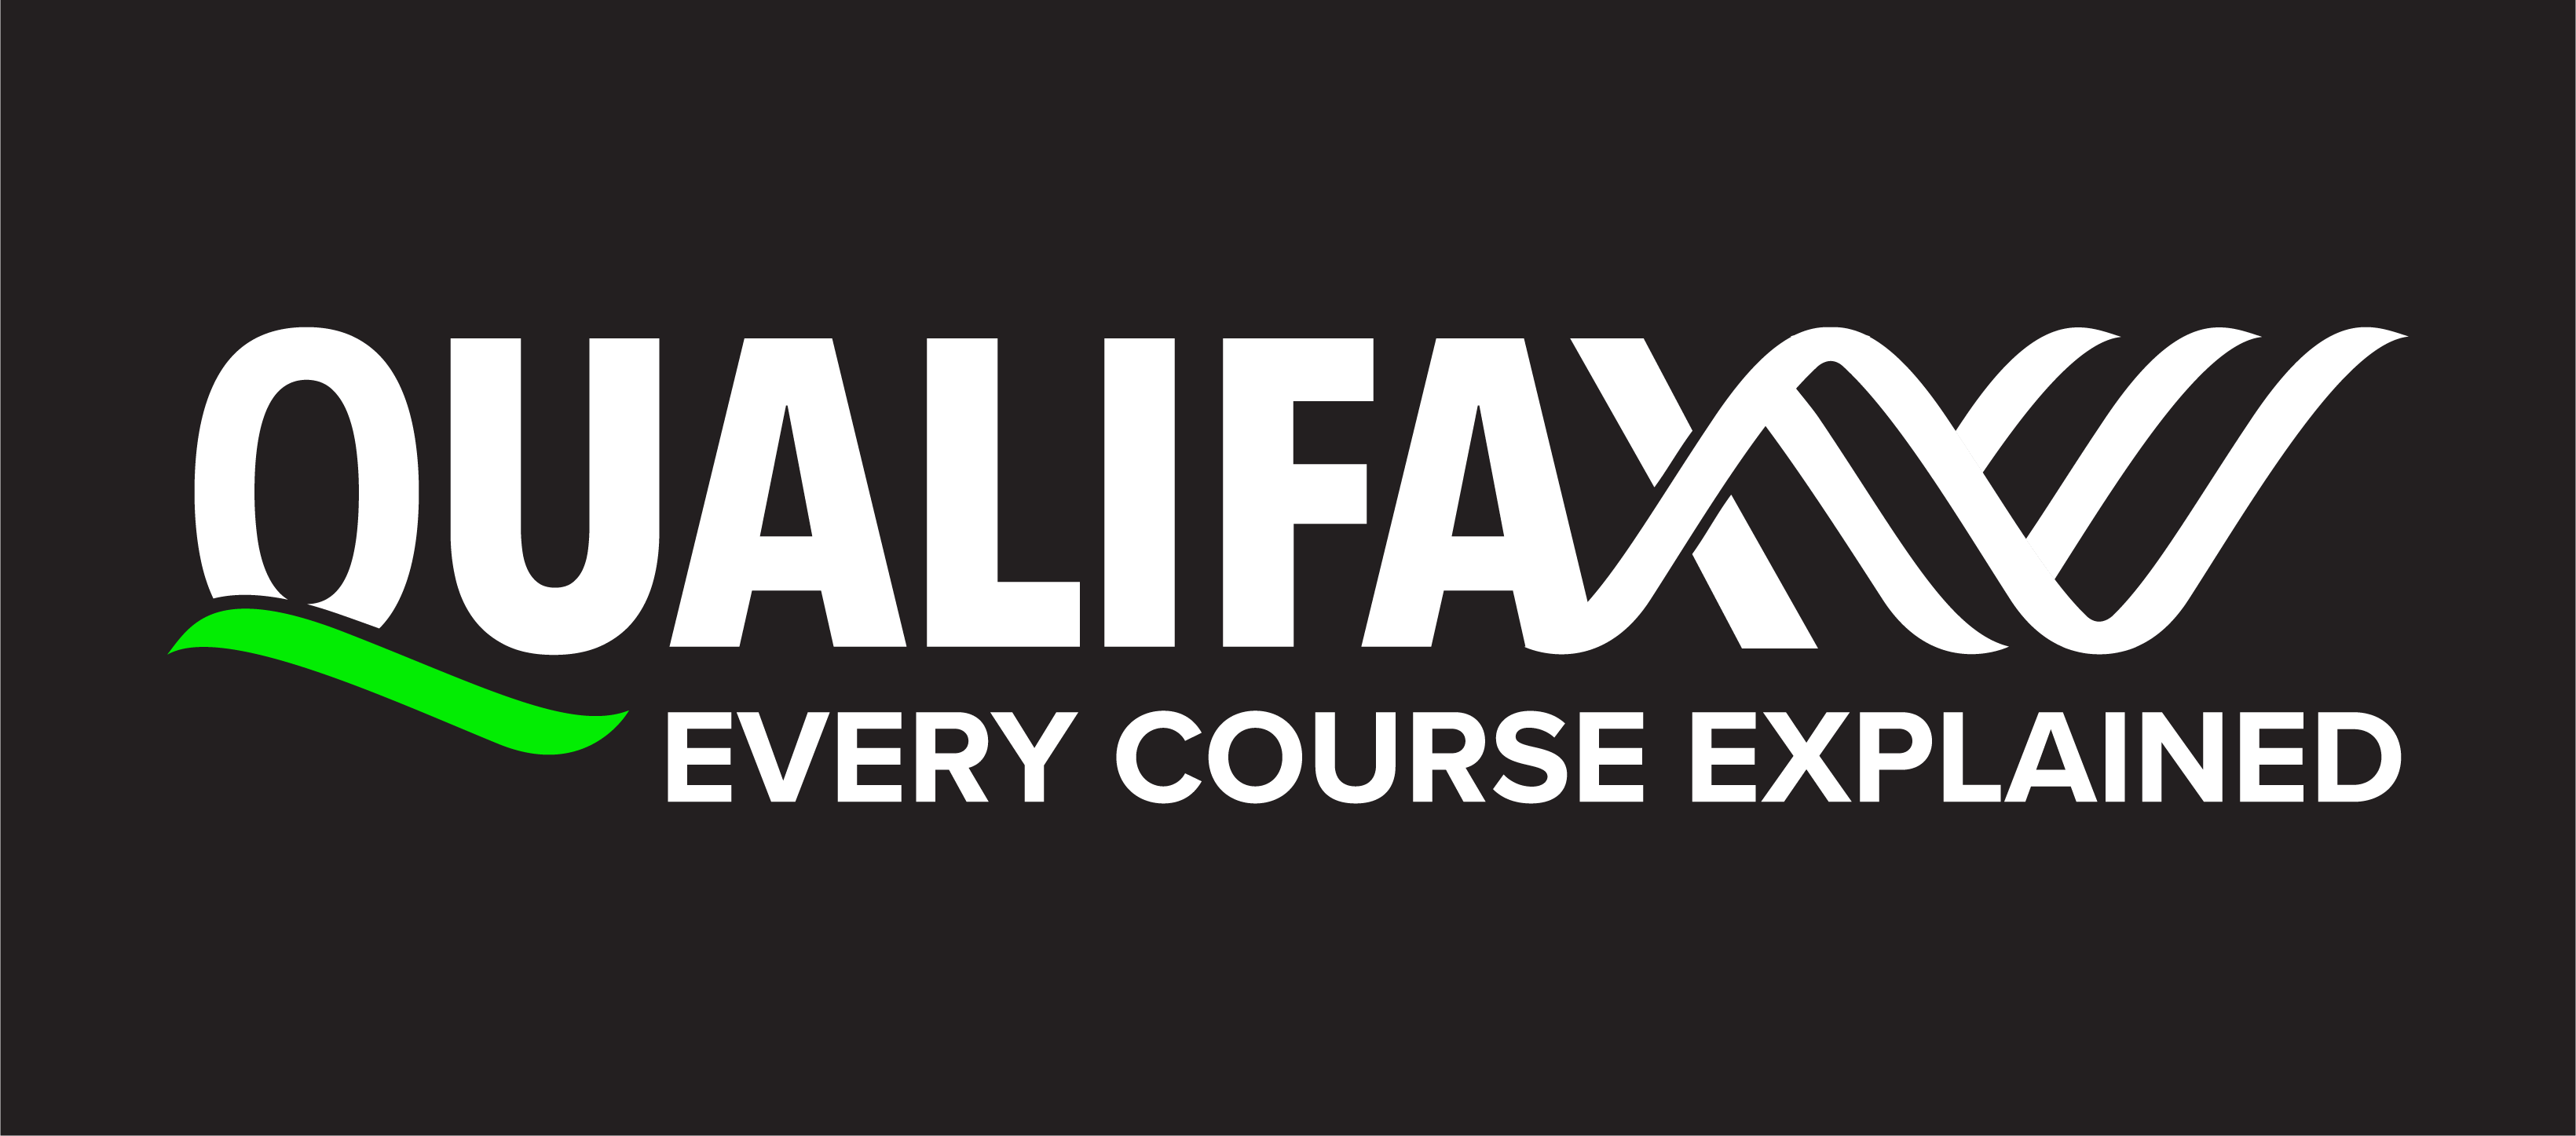 Qualifax logo 2